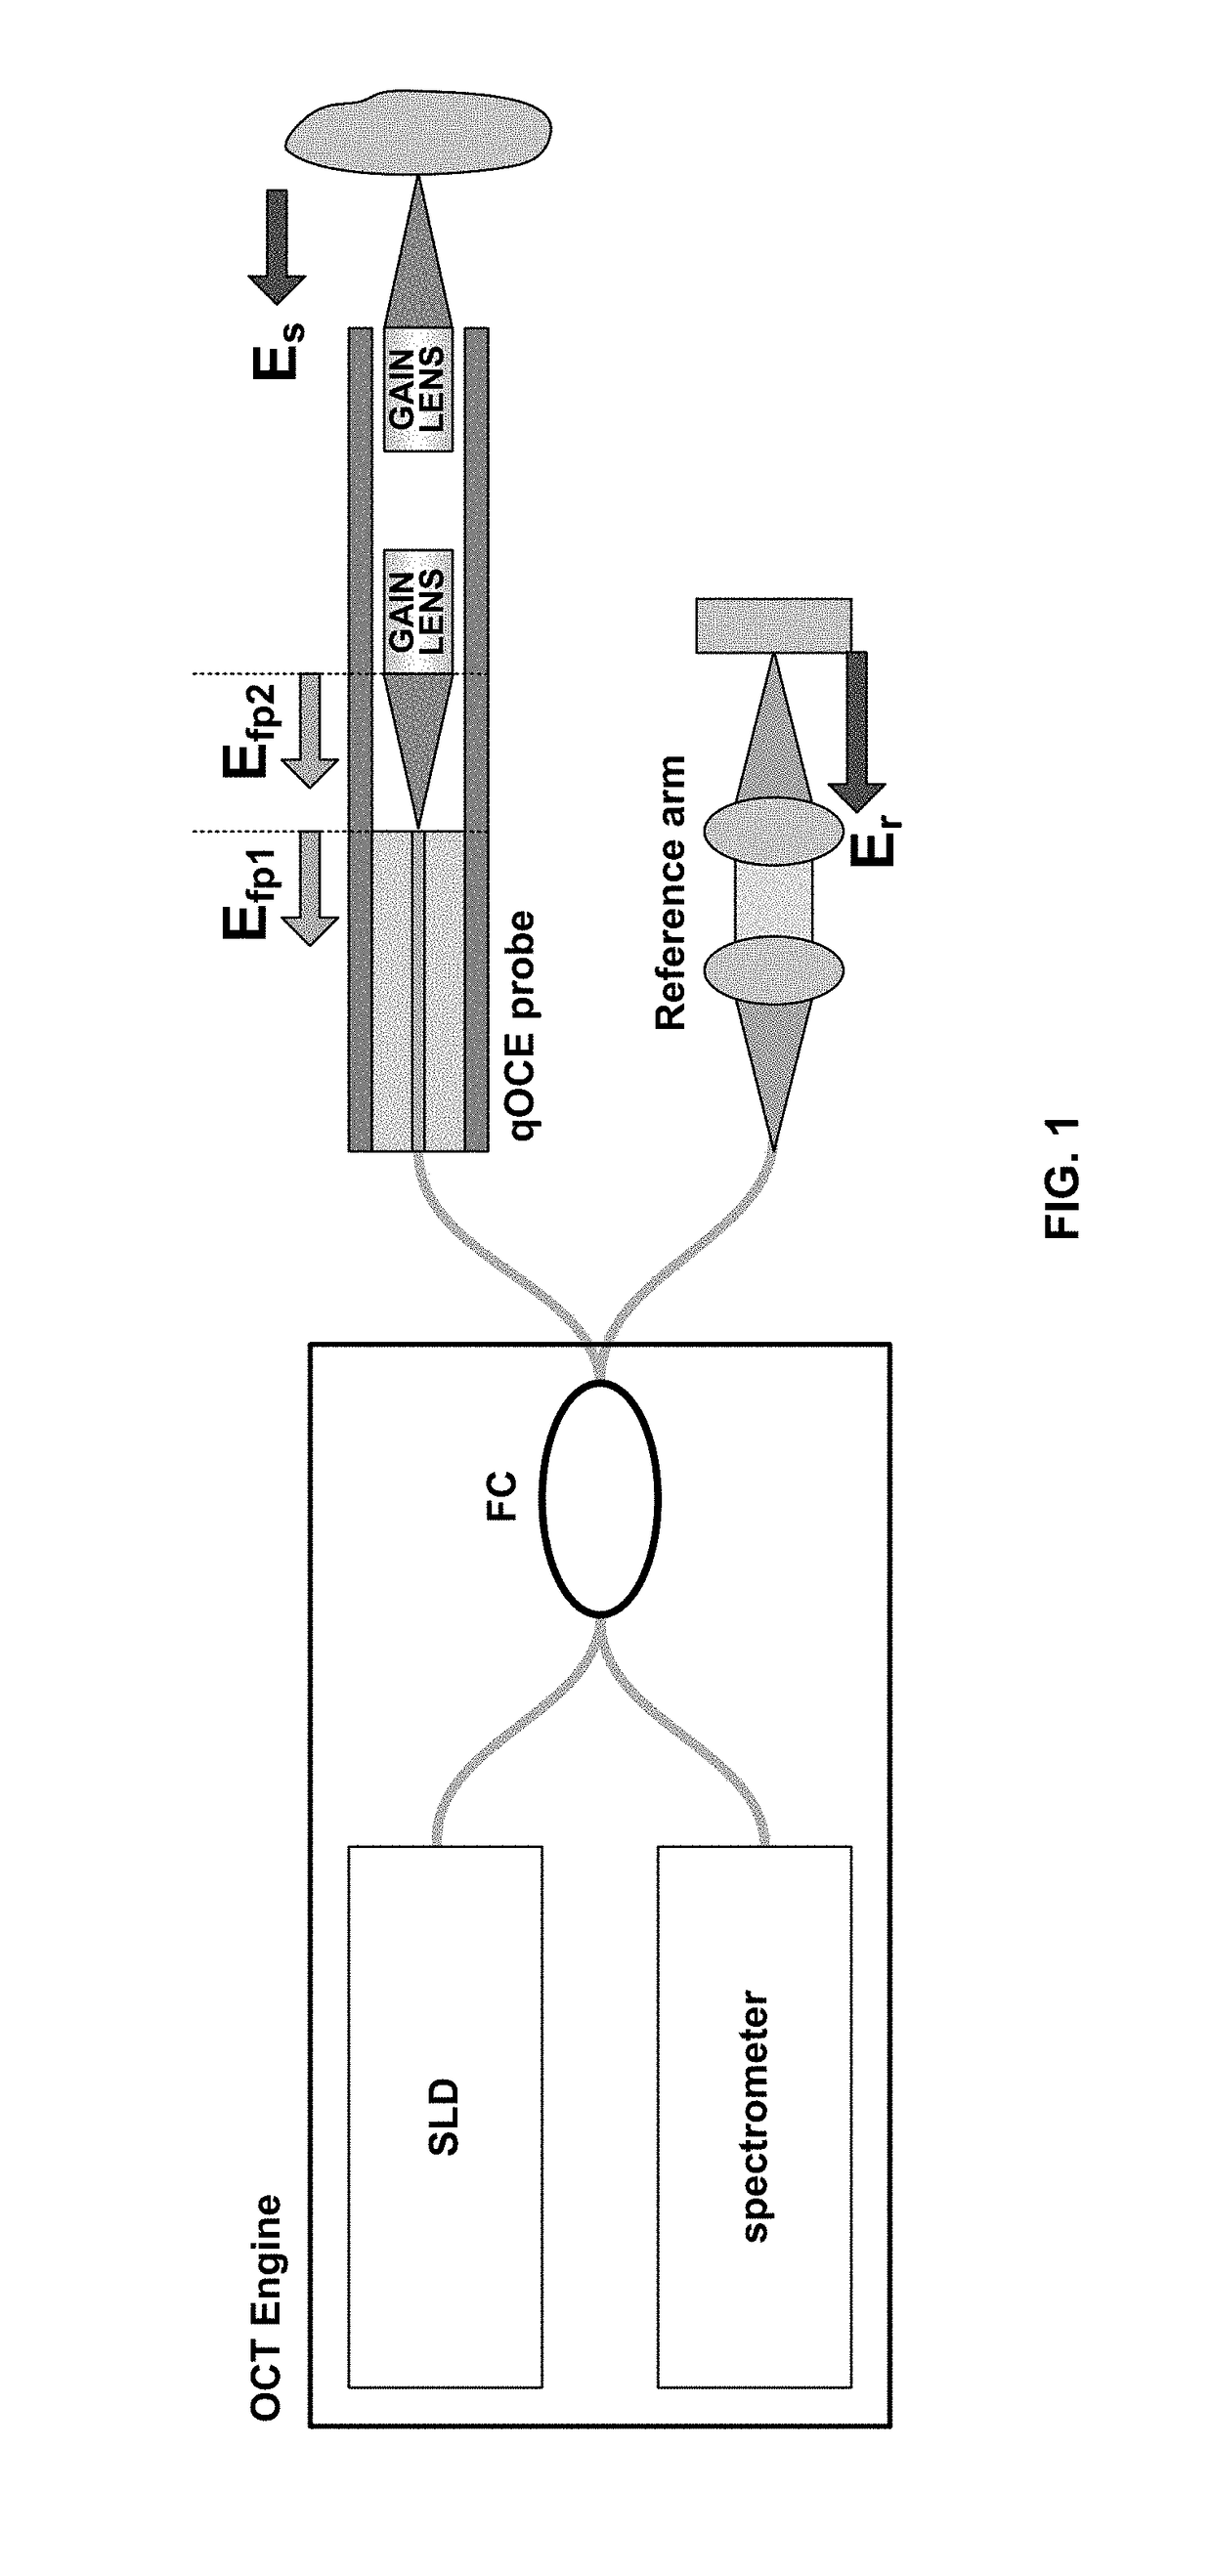 Optical coherence elastography